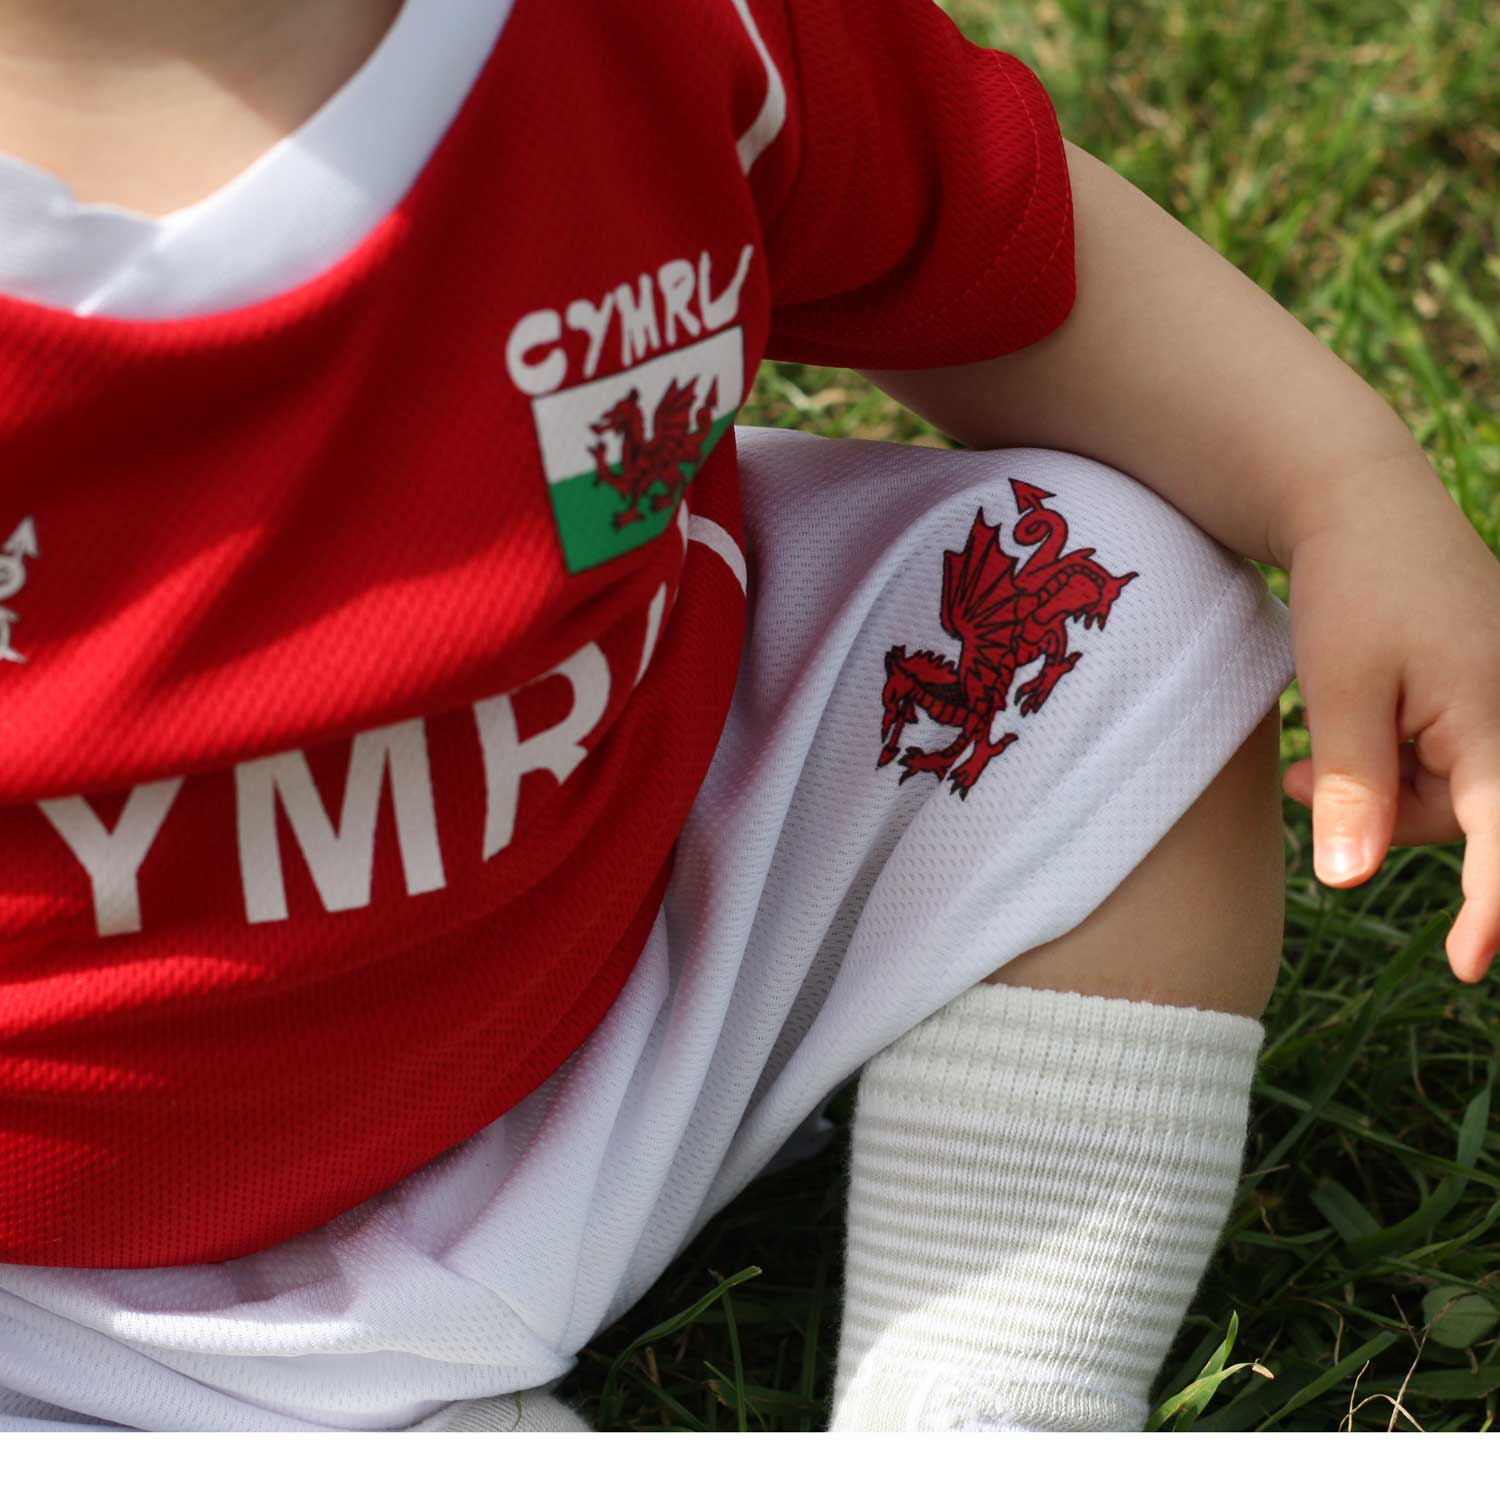 Welsh Football Kit - Wales / Cymru - Kids